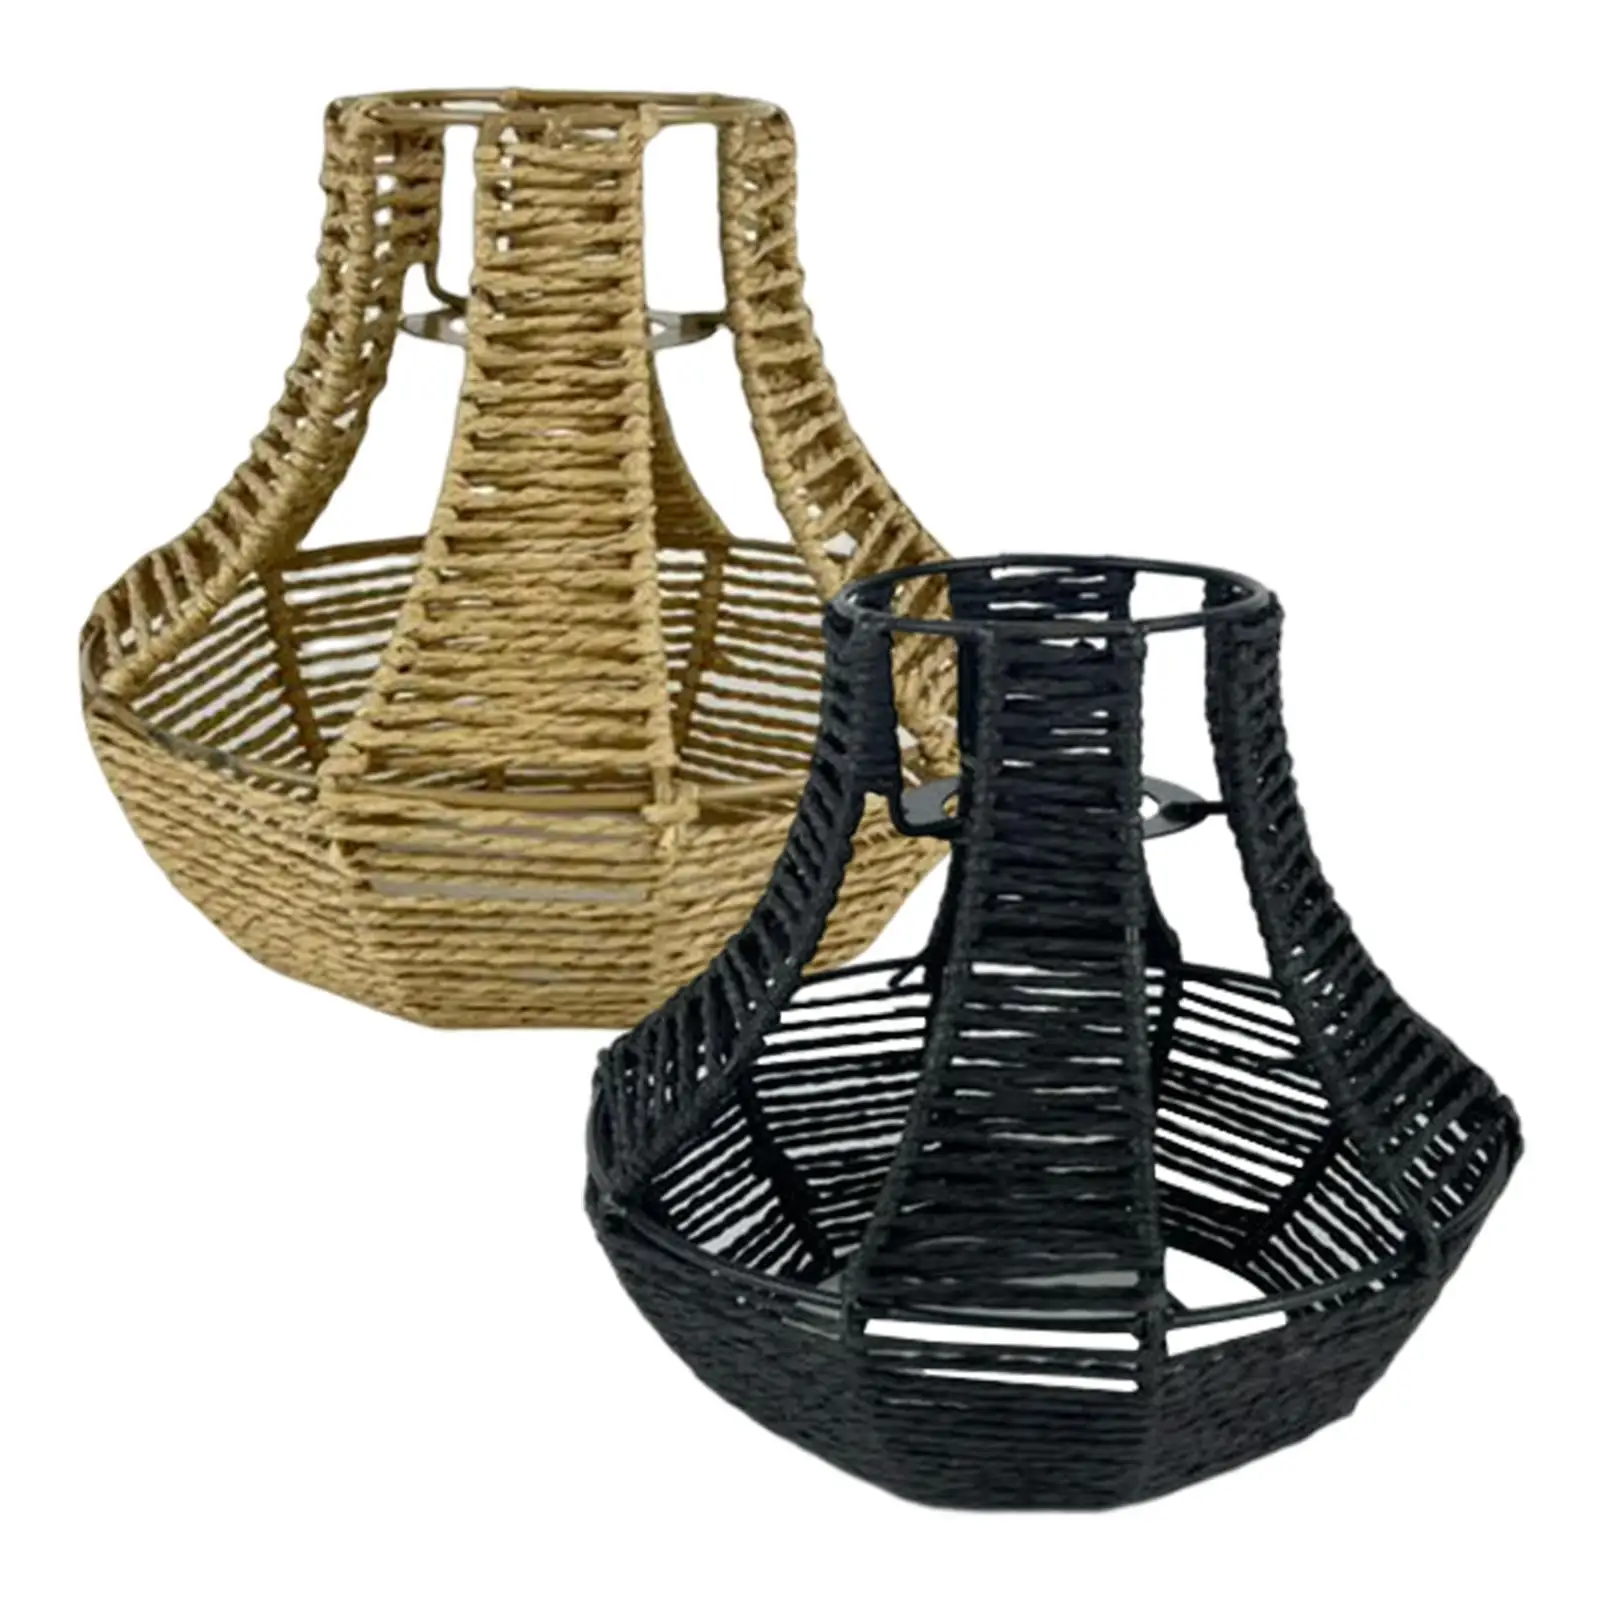 Weave Pendant Lamp Shade Hanging Lampshade Rope Rattan Lamp Cover, Accessory